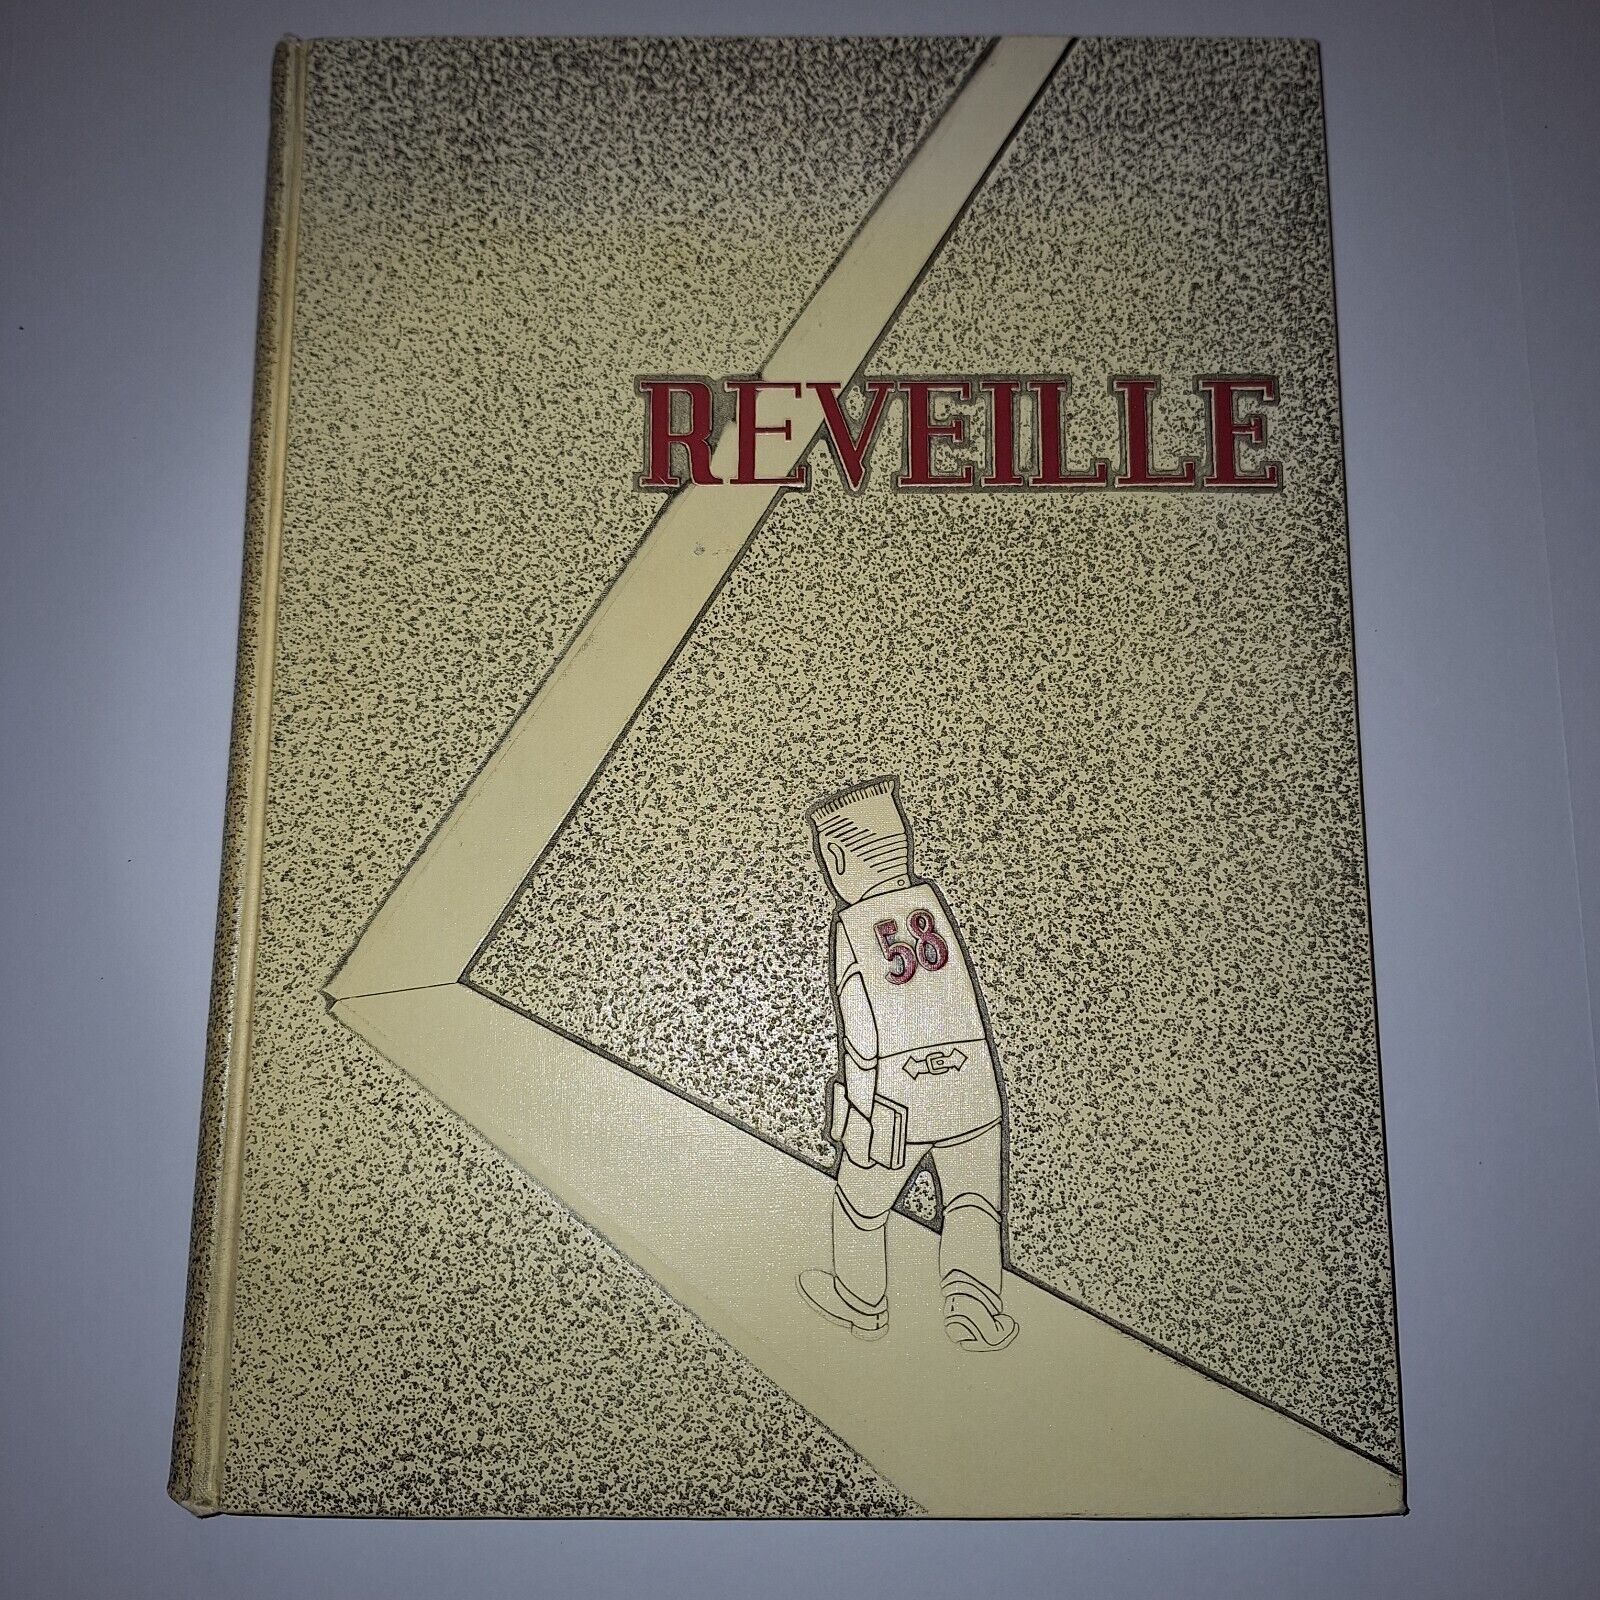 Reveille, 1958, The Arlington State College, Arlington Texas